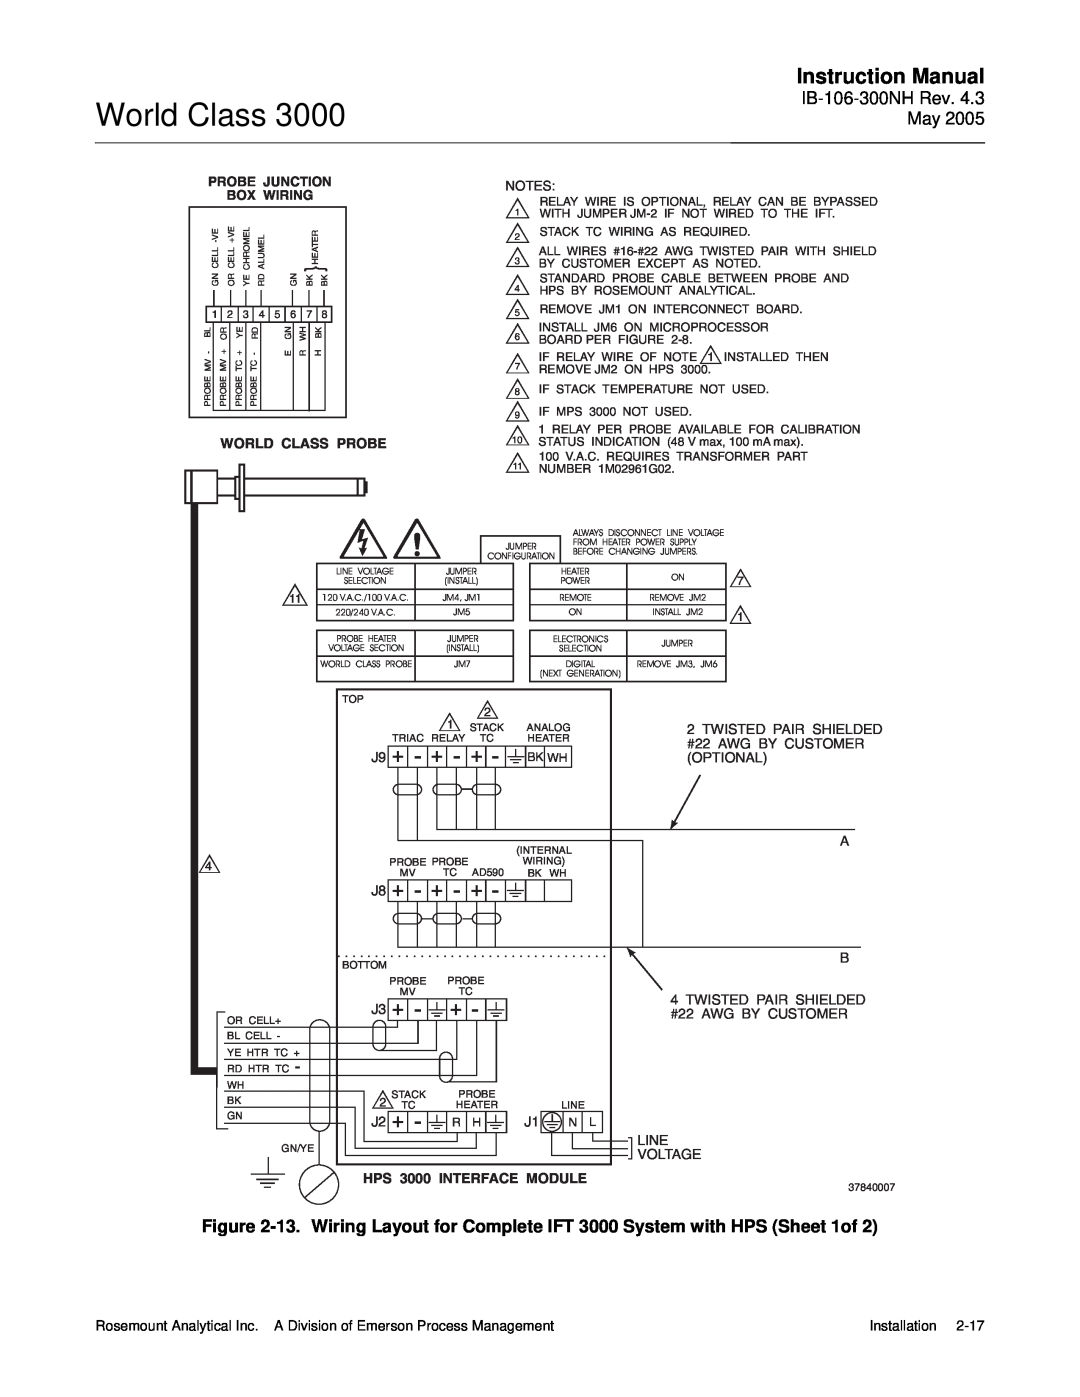 Emerson instruction manual J8 + - +, Instruction Manual, World Class Probe, HPS 3000 INTERFACE MODULE 